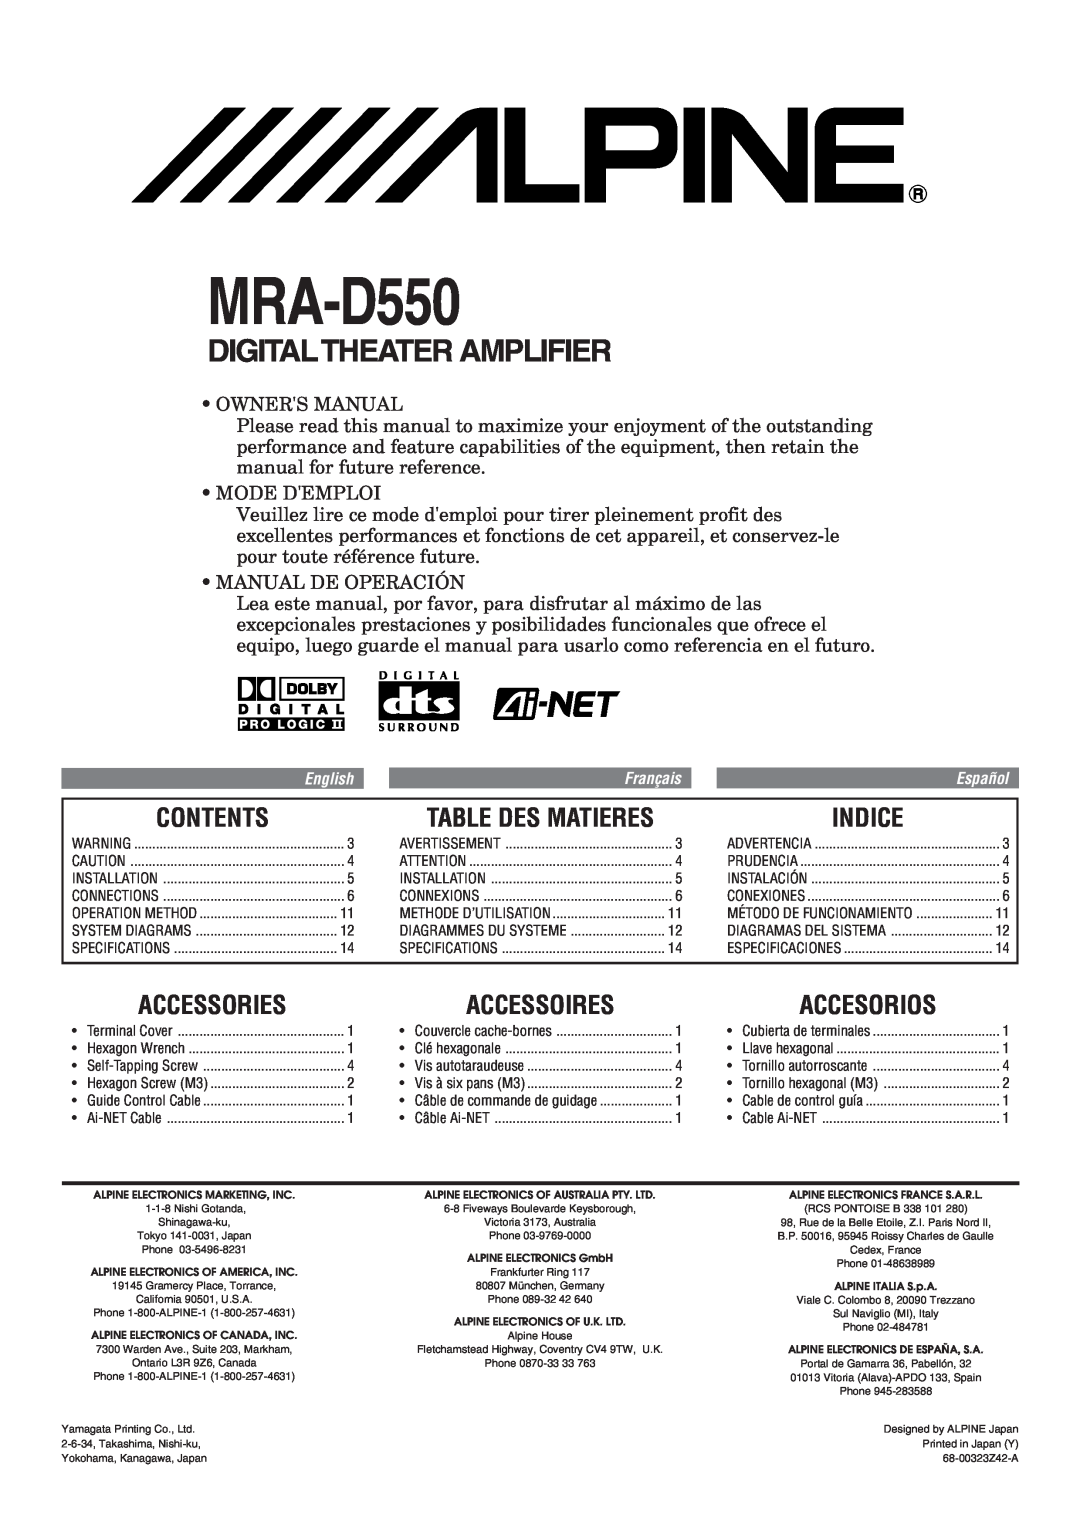 Alpine MRA-D550 owner manual Contents, Indice, Accessories, Accesorios, Table Des Matieres, Accessoires, Mode Demploi 